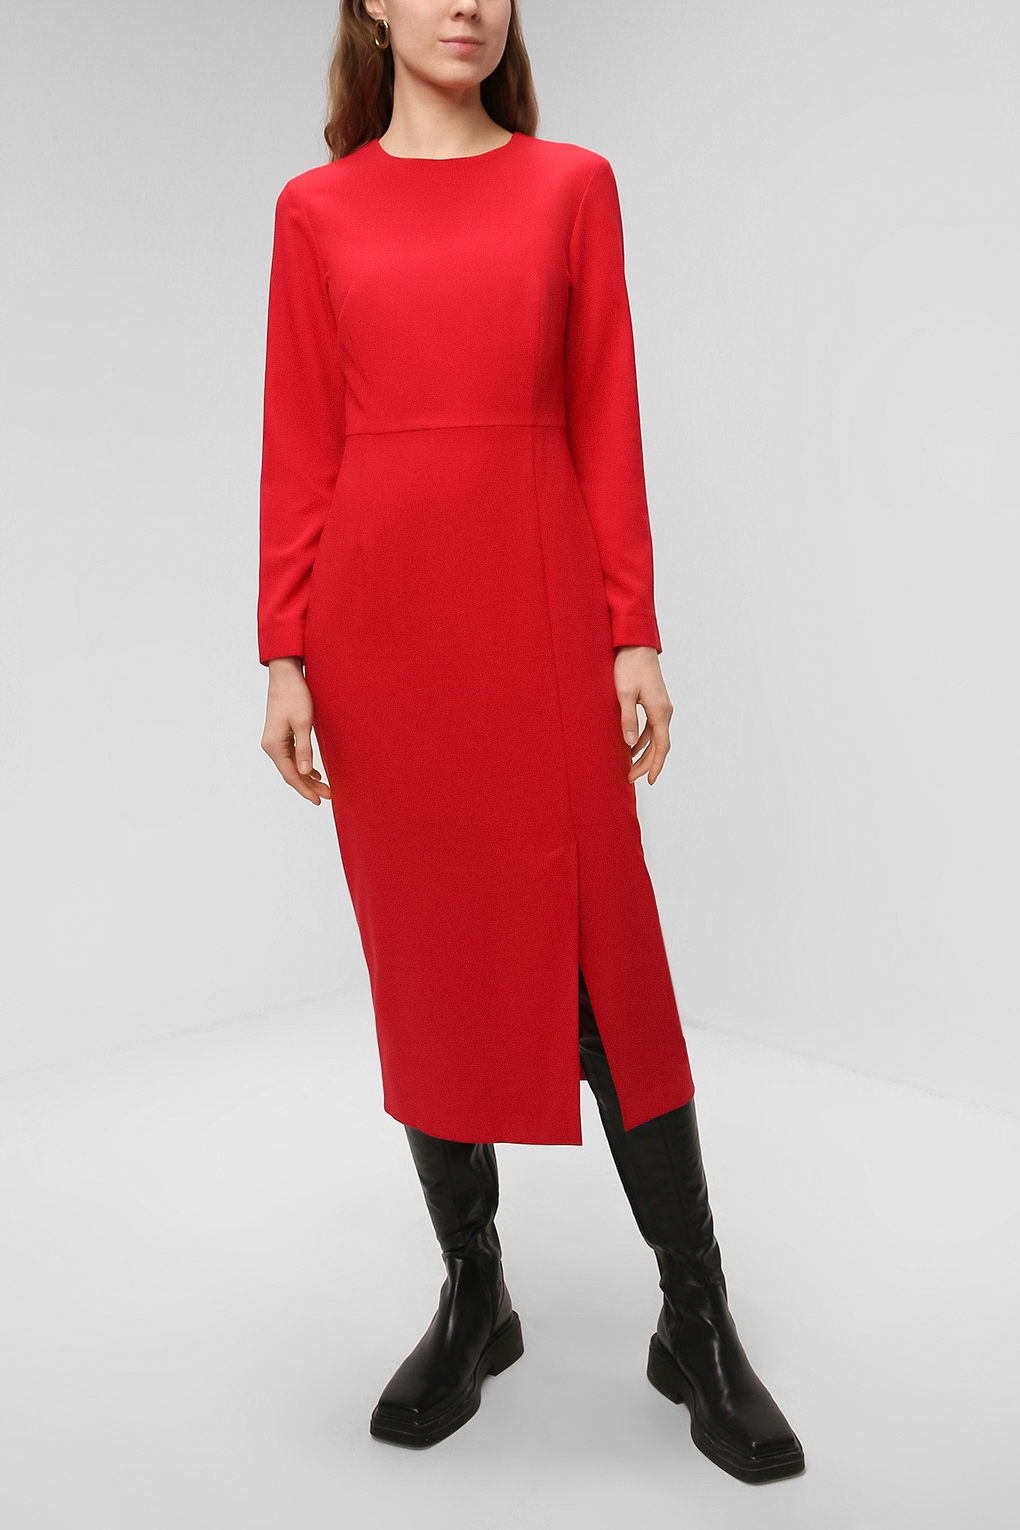 Платье женское PAOLA RAY PR221-3065 красное XS